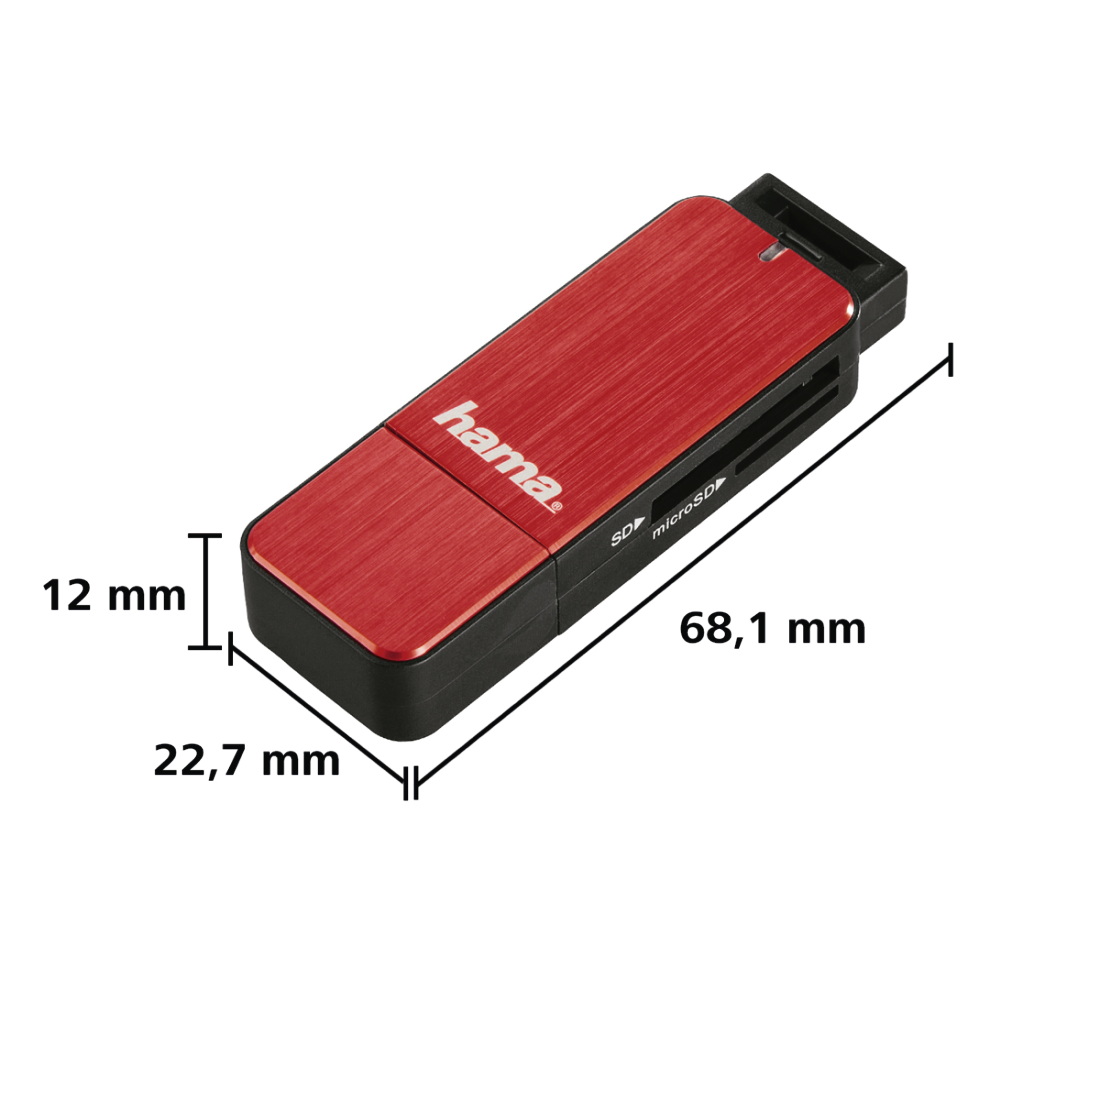 00123902 Hama USB 3.0 Card Reader, SD/microSD, red